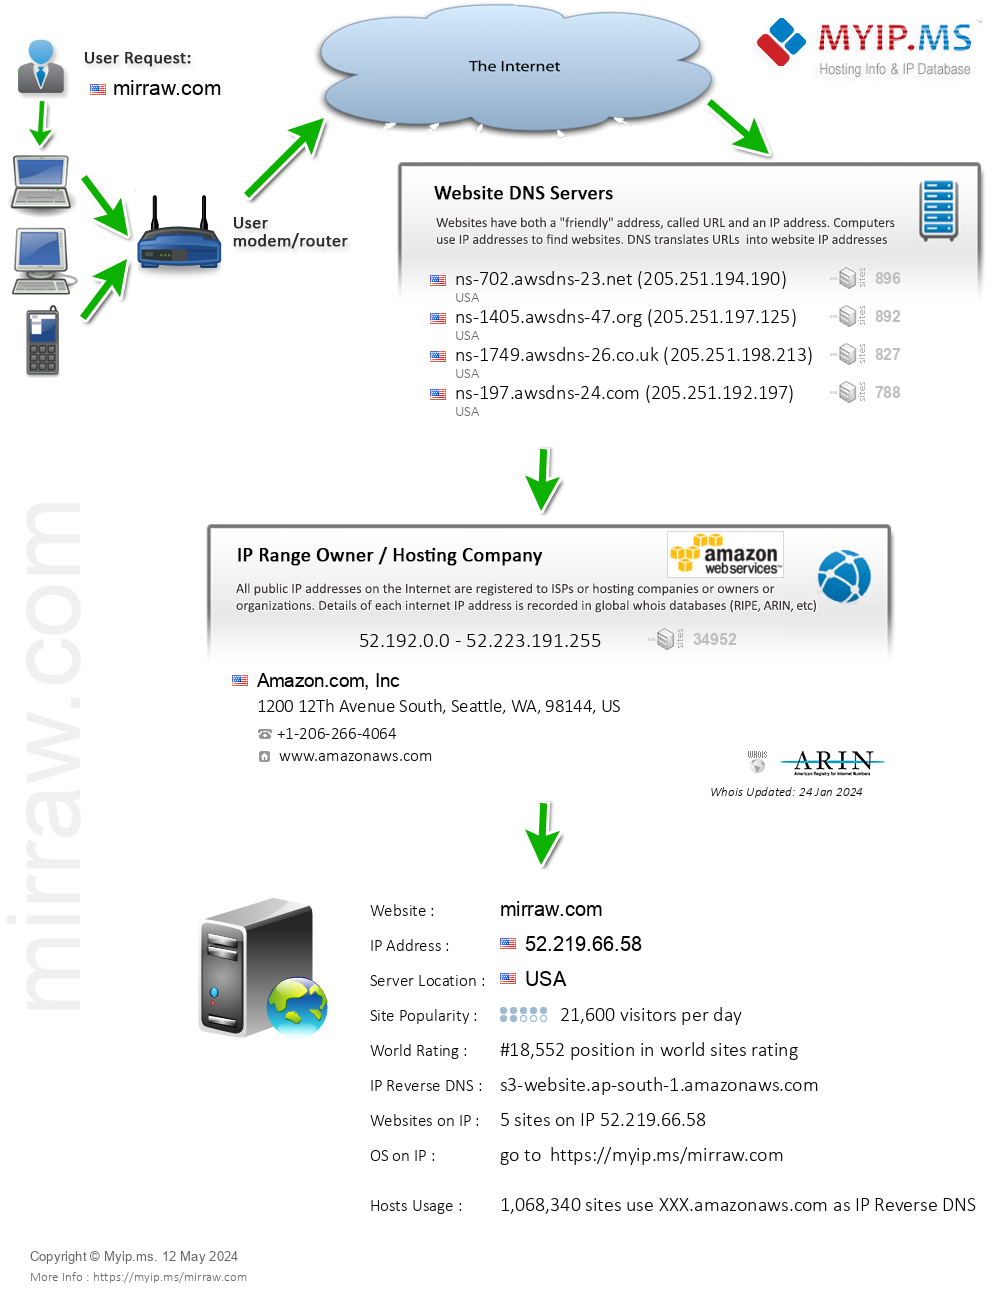 Mirraw.com - Website Hosting Visual IP Diagram